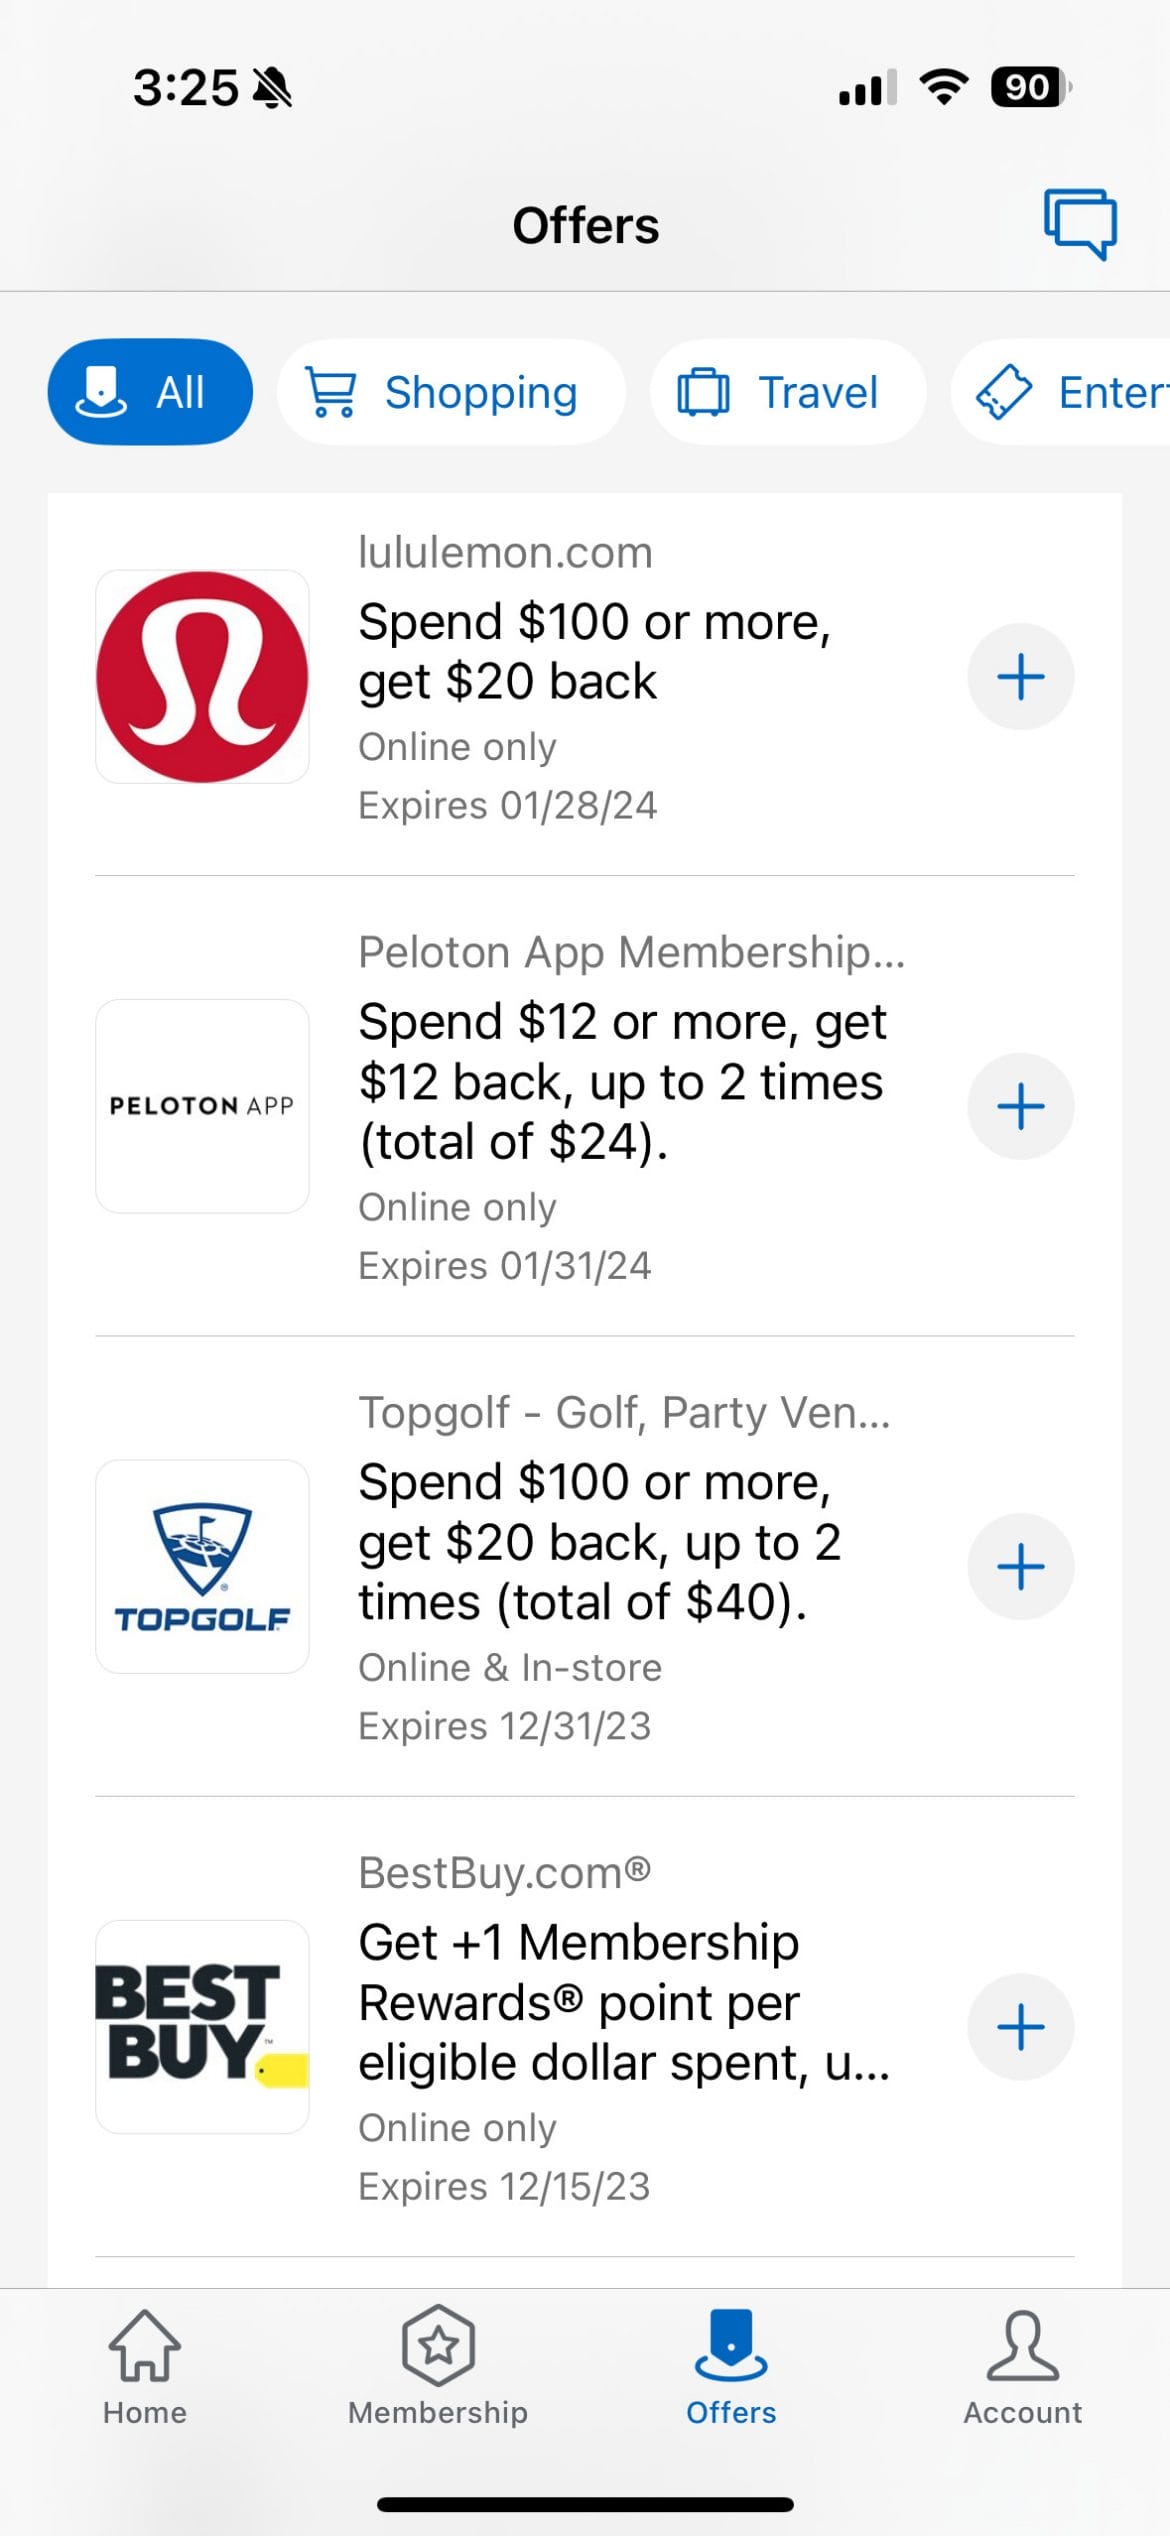 Peloton offer in American Express portal.